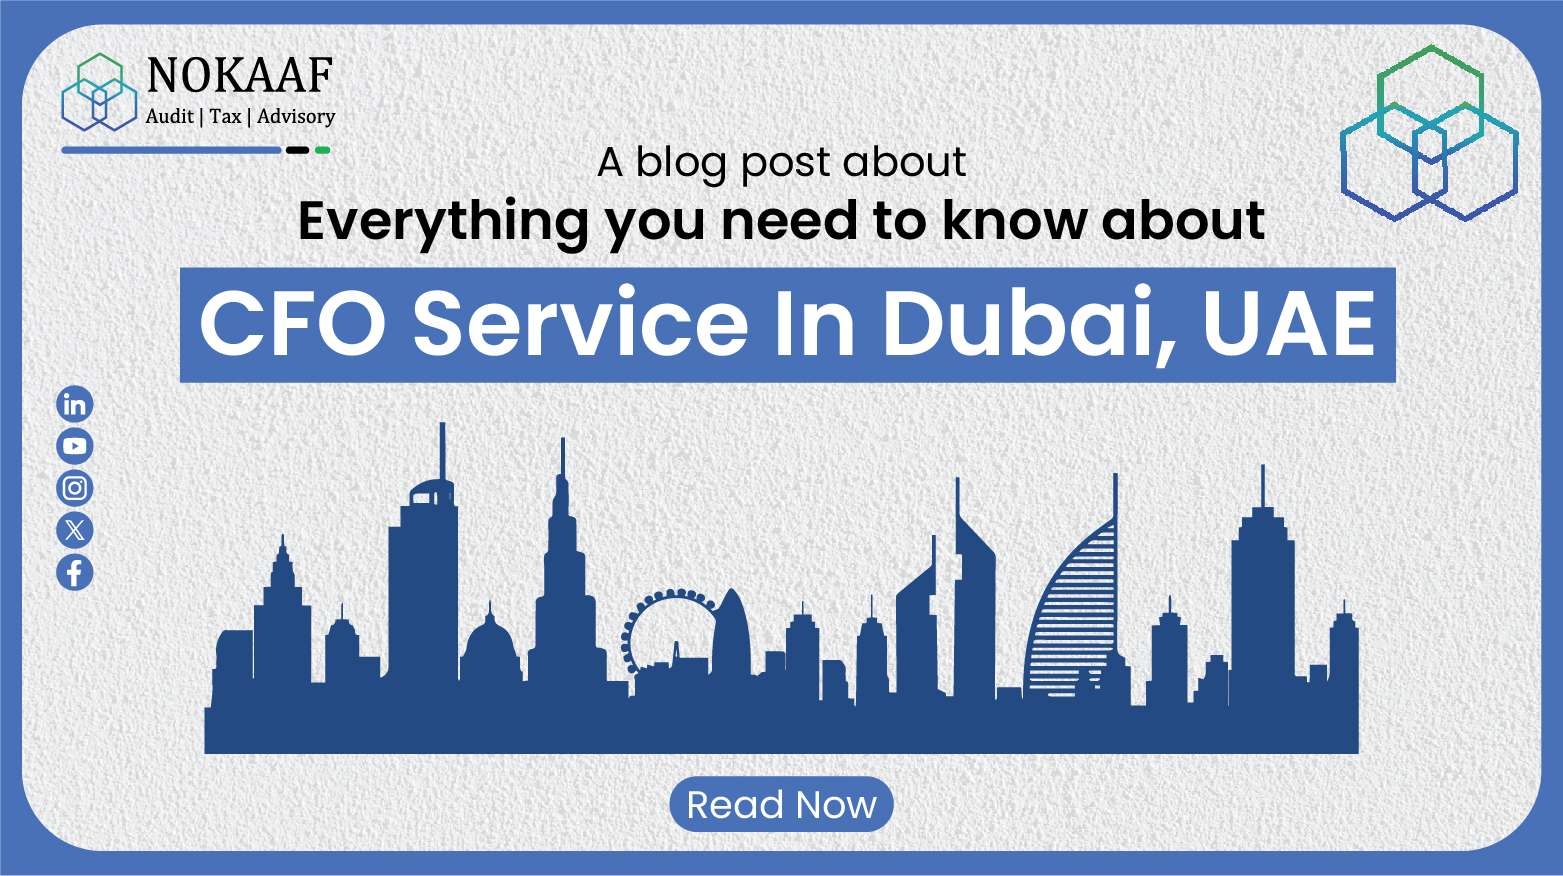 CFO Service In Dubai, UAE